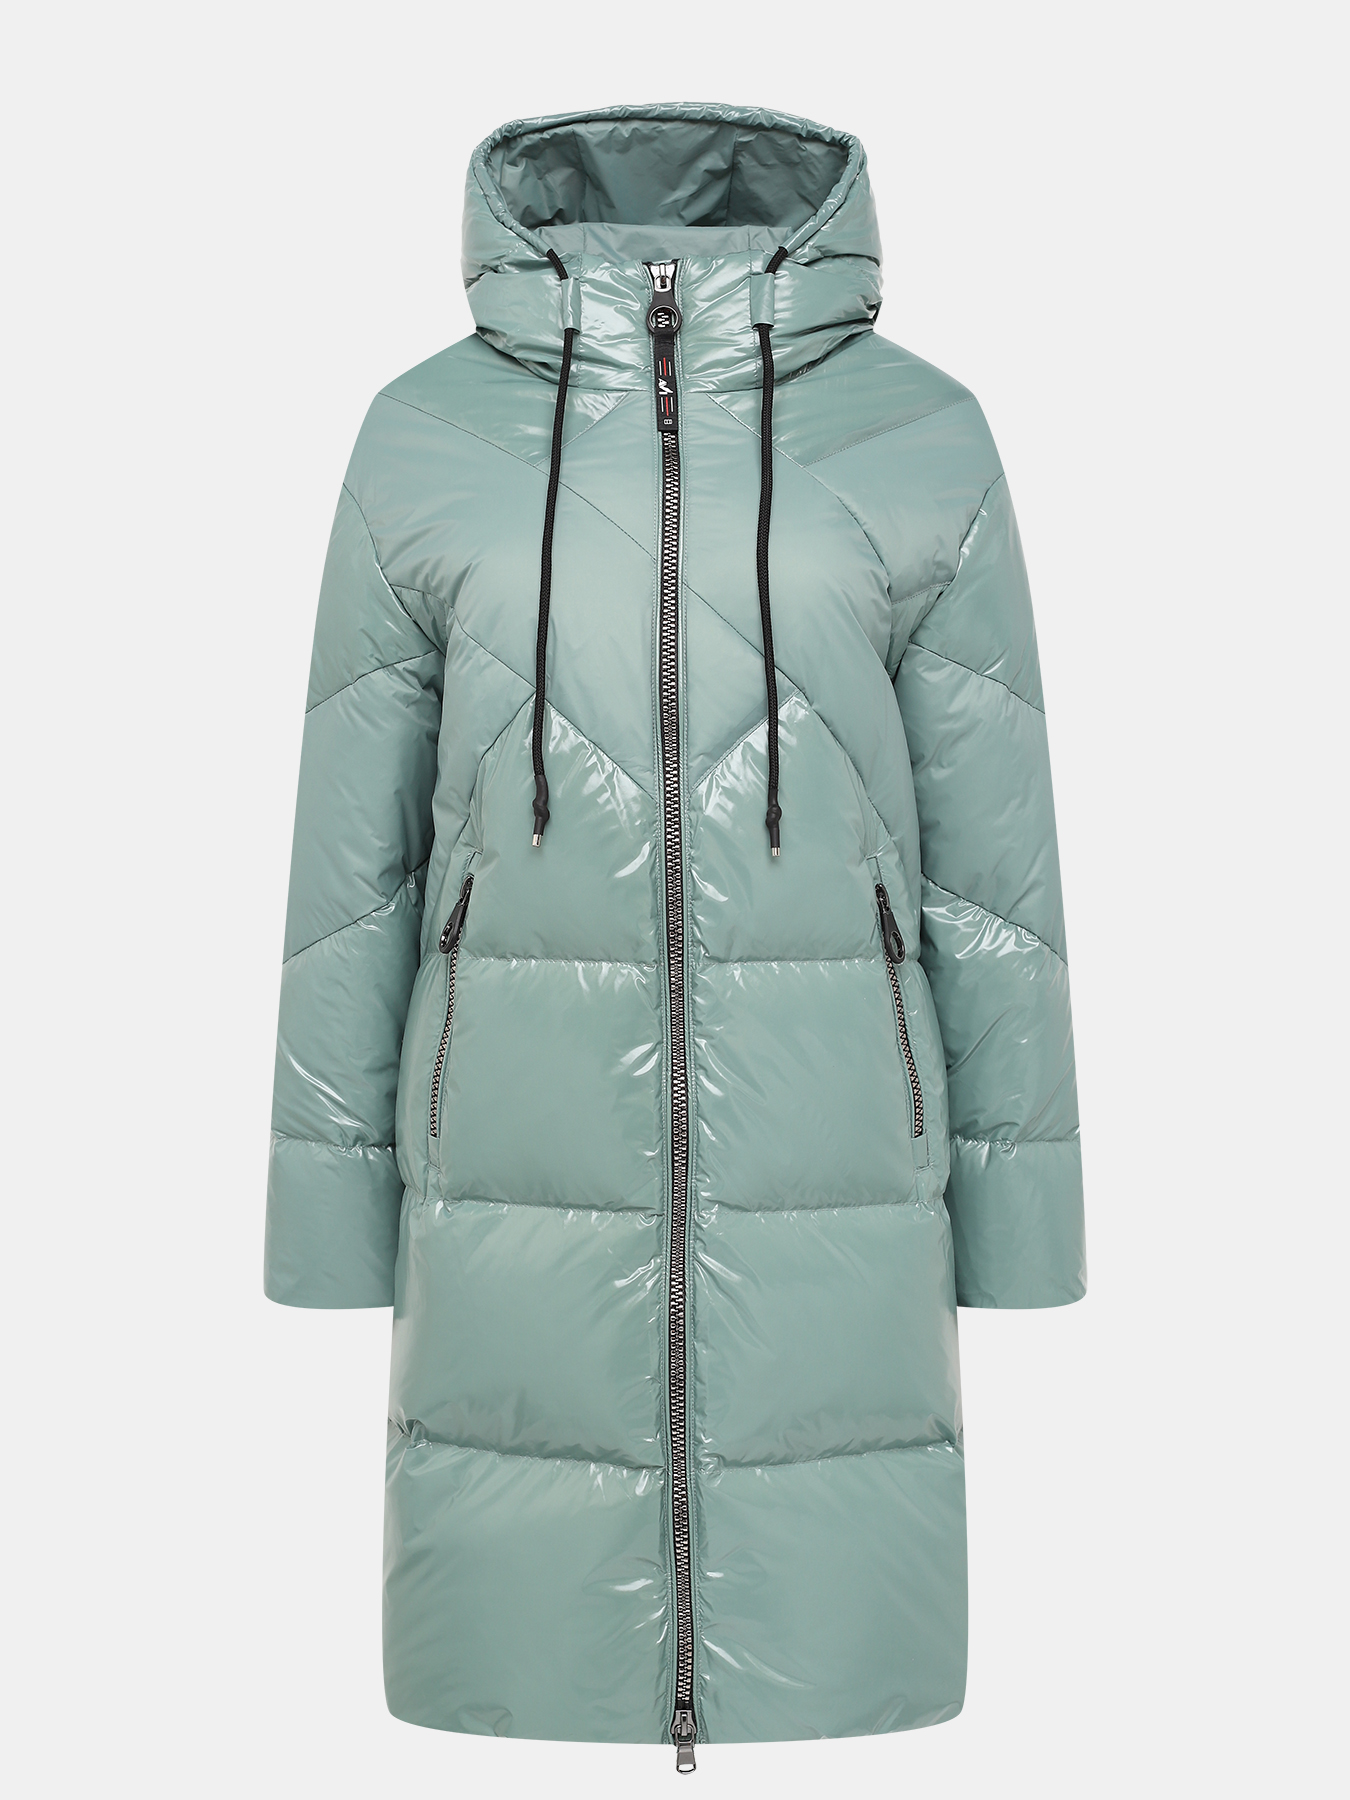 Пальто зимнее AVI 433635-024, цвет мятный, размер 52 - фото 1